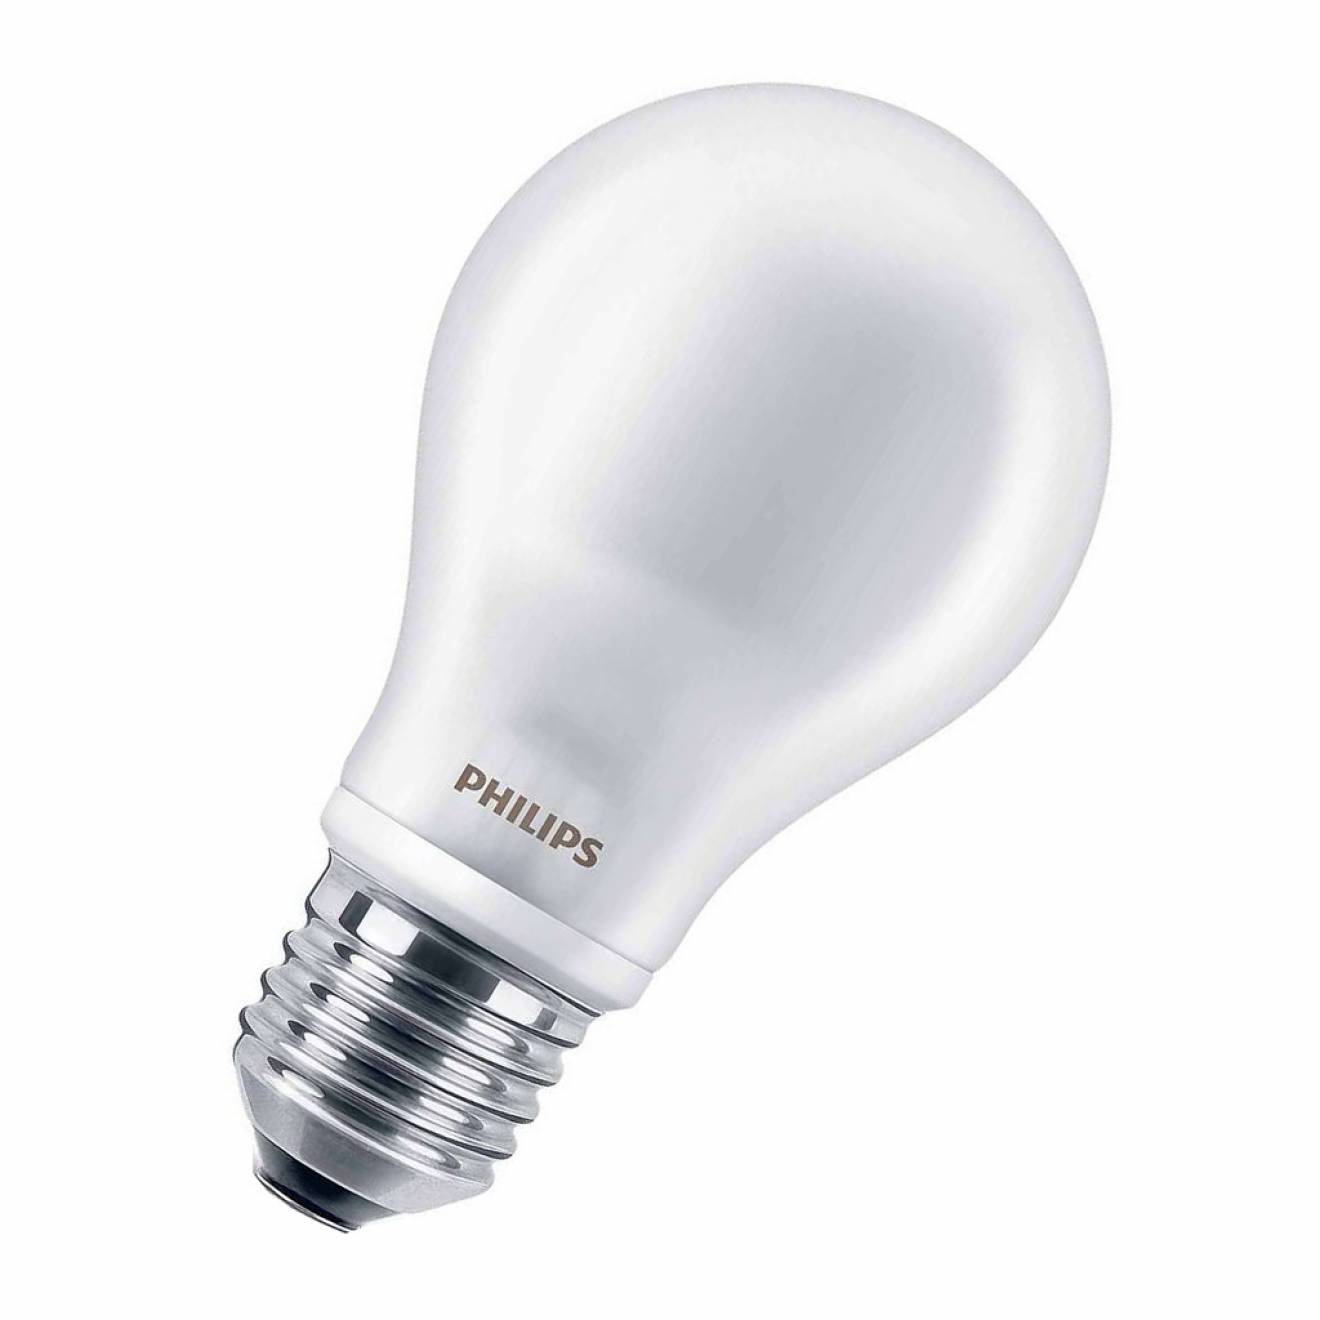 Philips Classic LED Lampe E27 5W warmweiß, nicht dimmbar